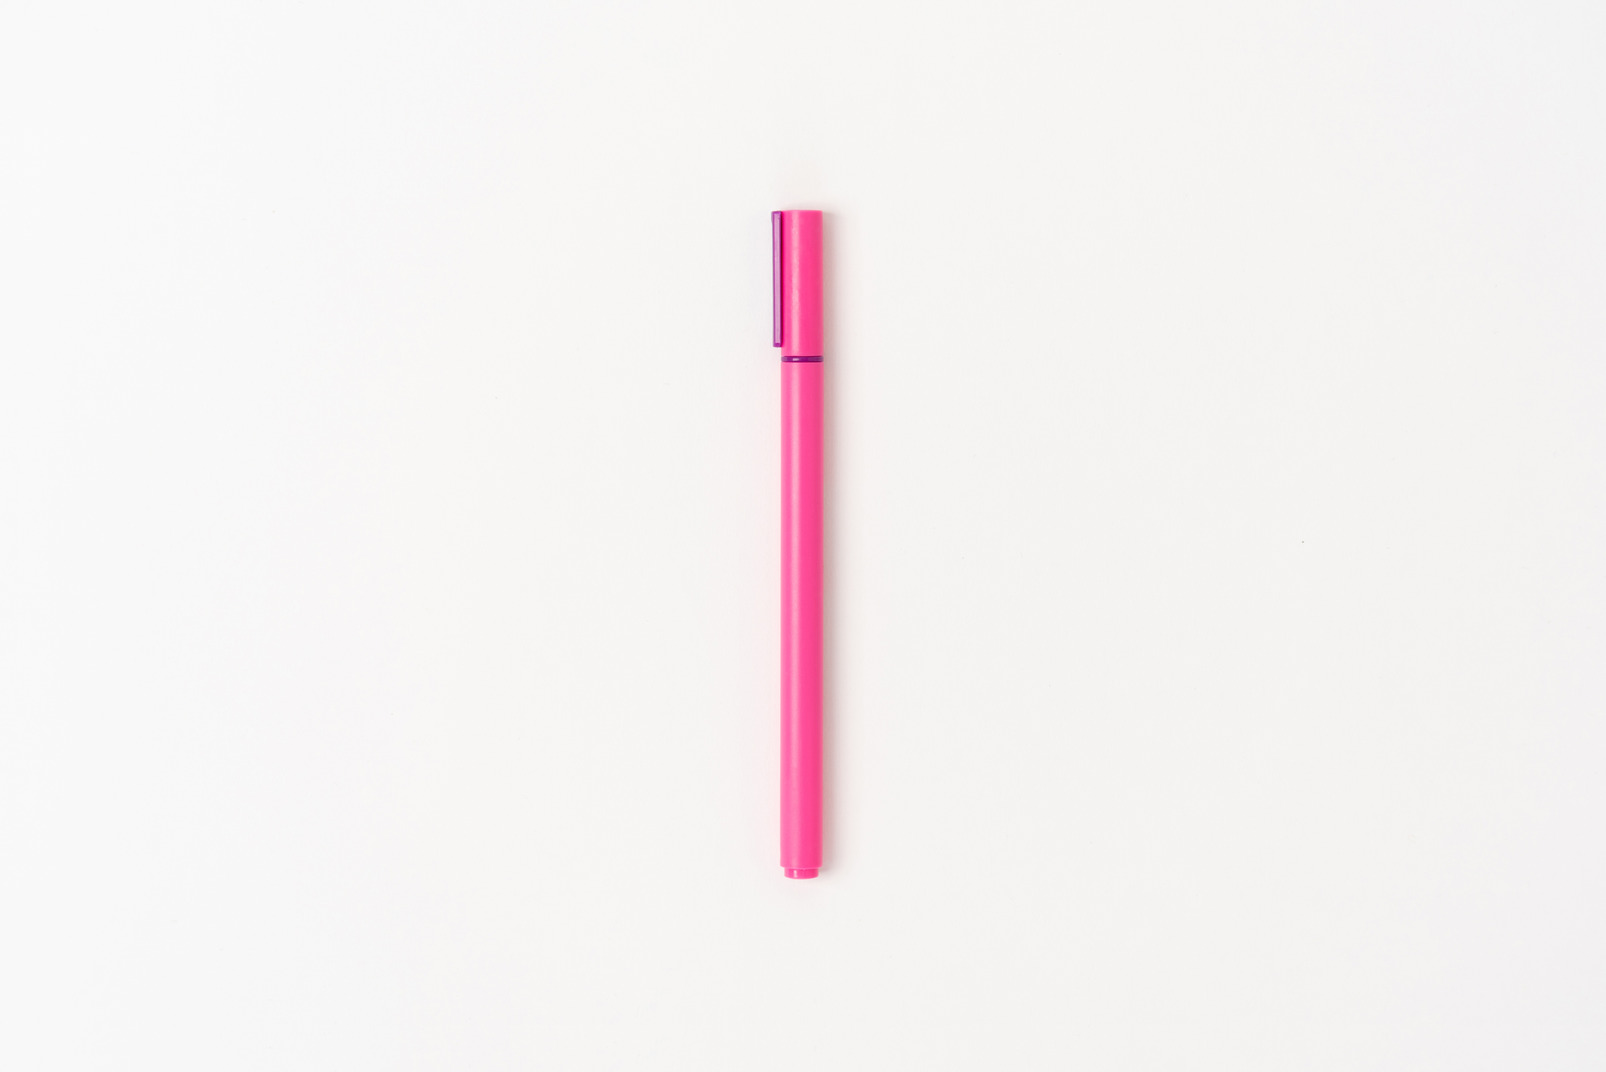 Pink marker pen on white background